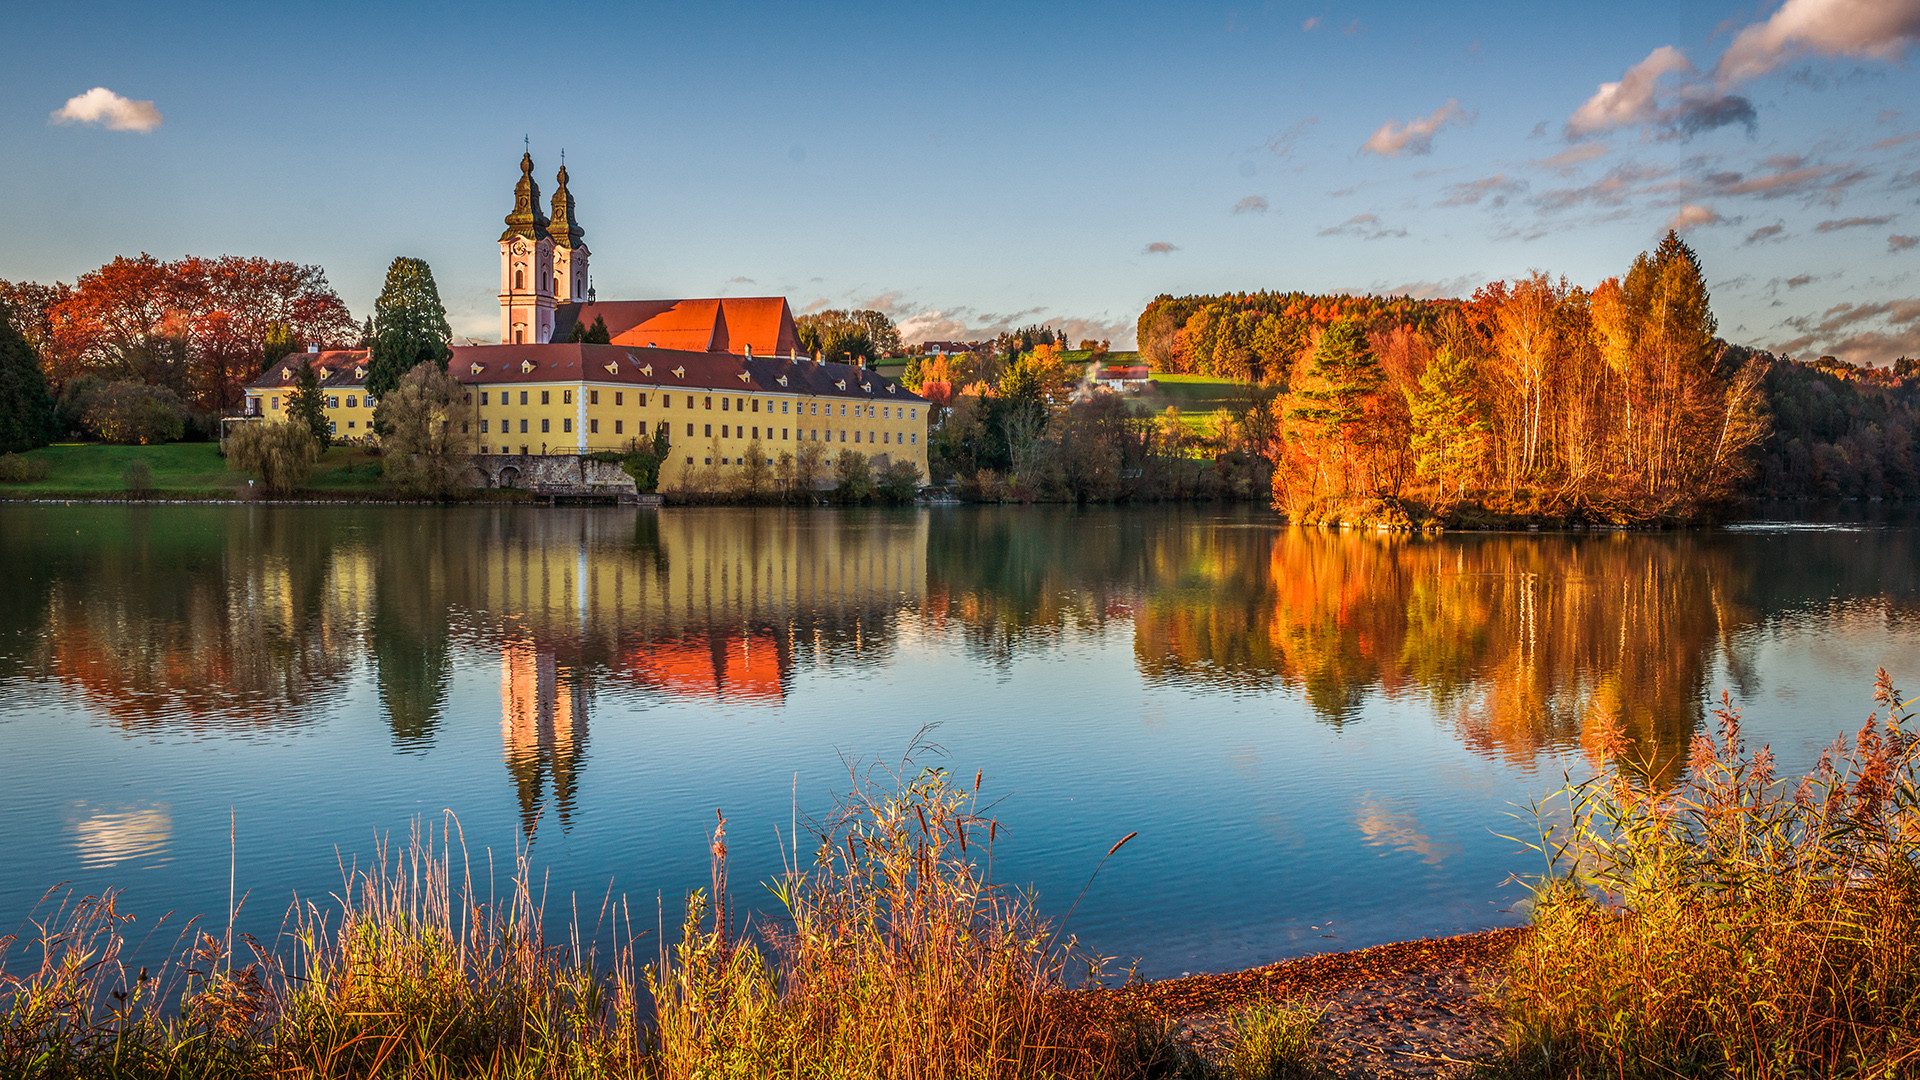 Autumn at the Vornbach Monastery